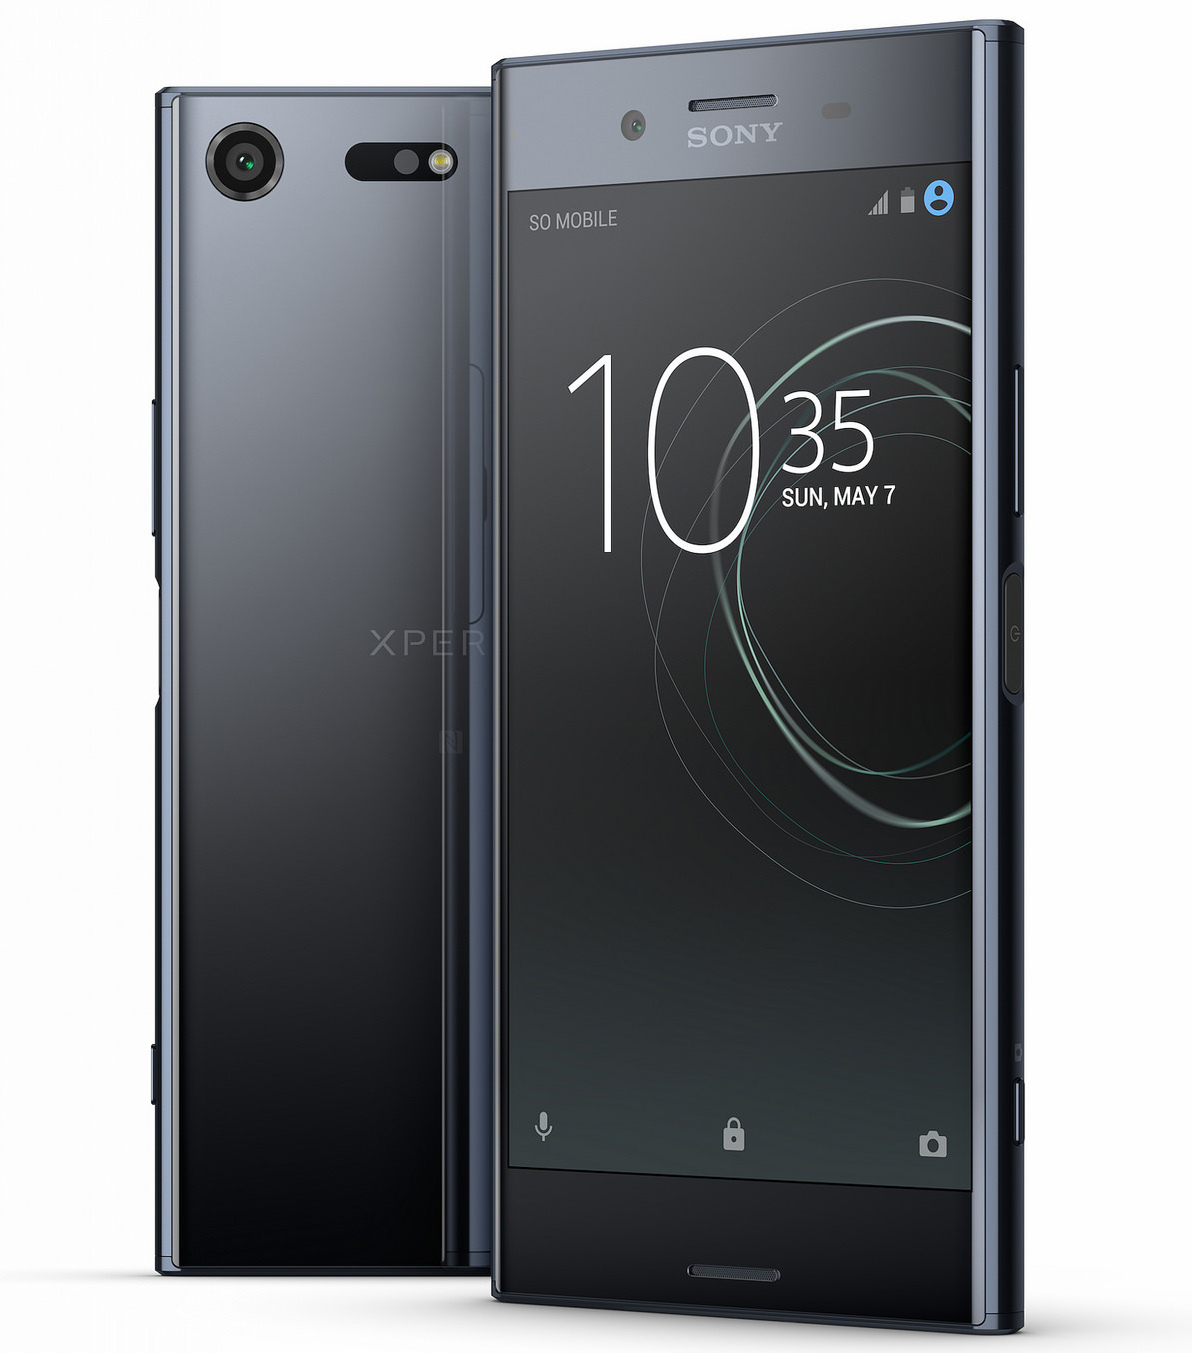 Sony Xperia XZ premium g8141 4gb 64gb 19mp 4k HDR 5.49" android smartphone black - $299.99